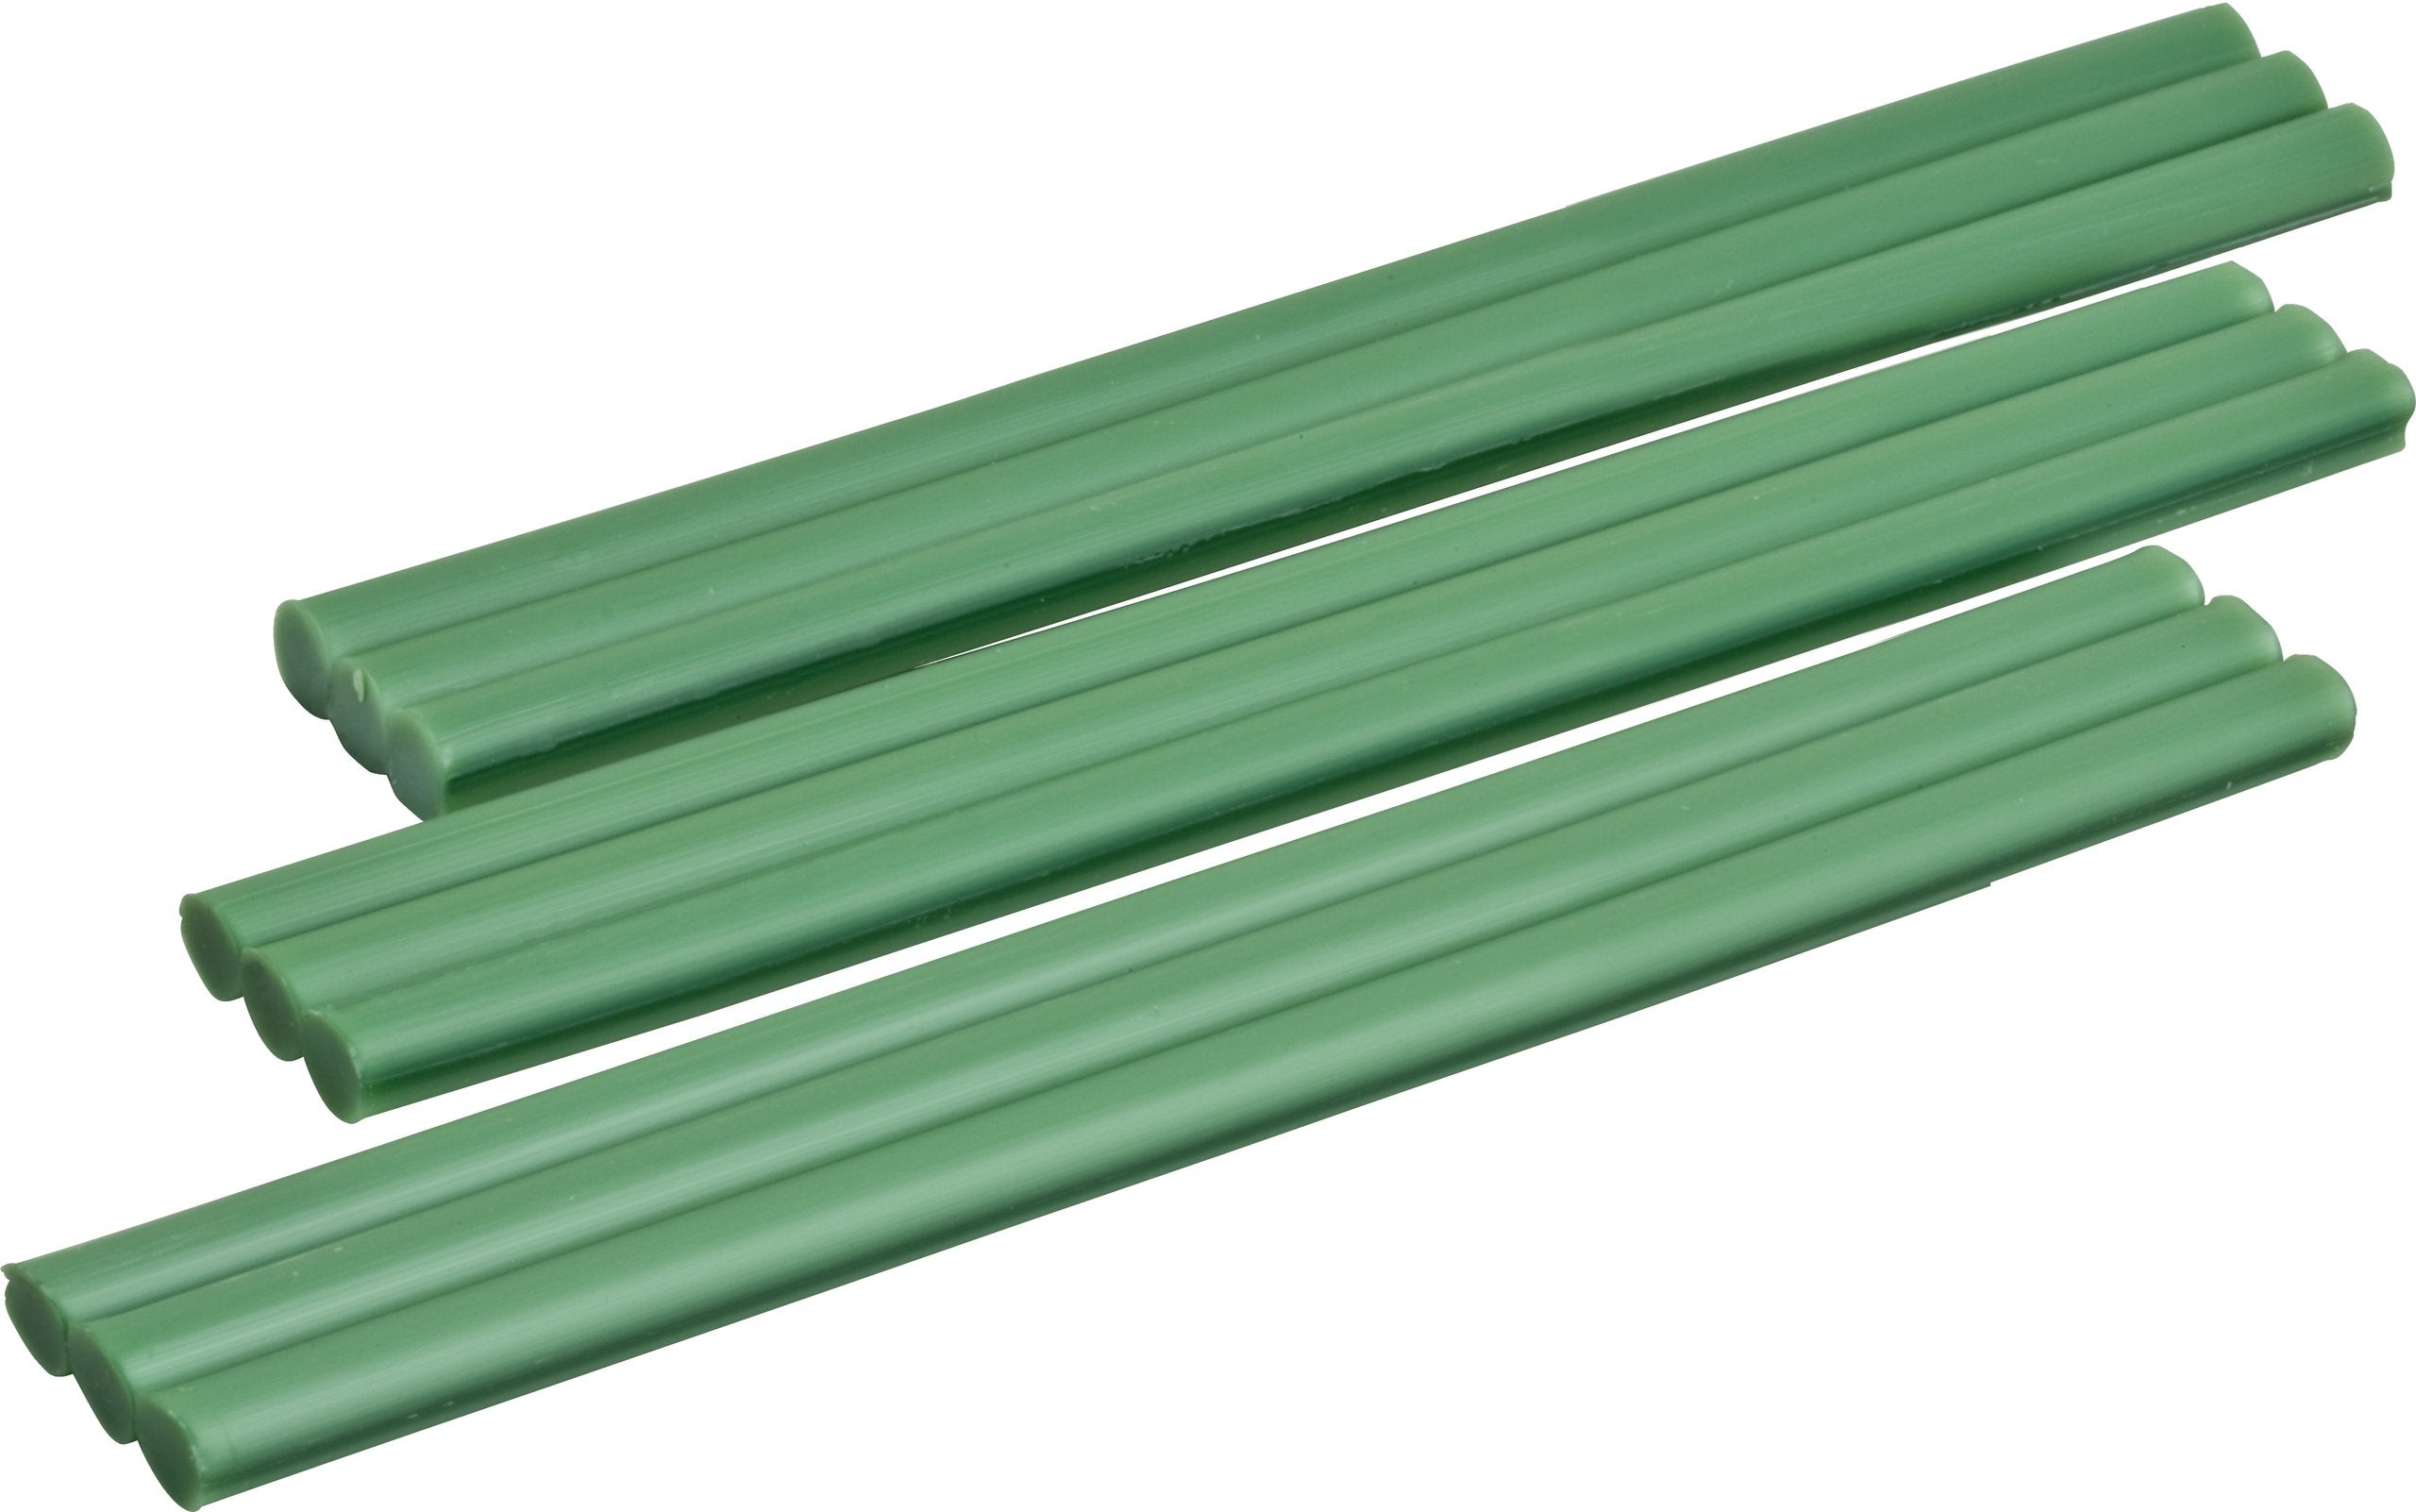 25lb Light Green Sprue Rod Wax